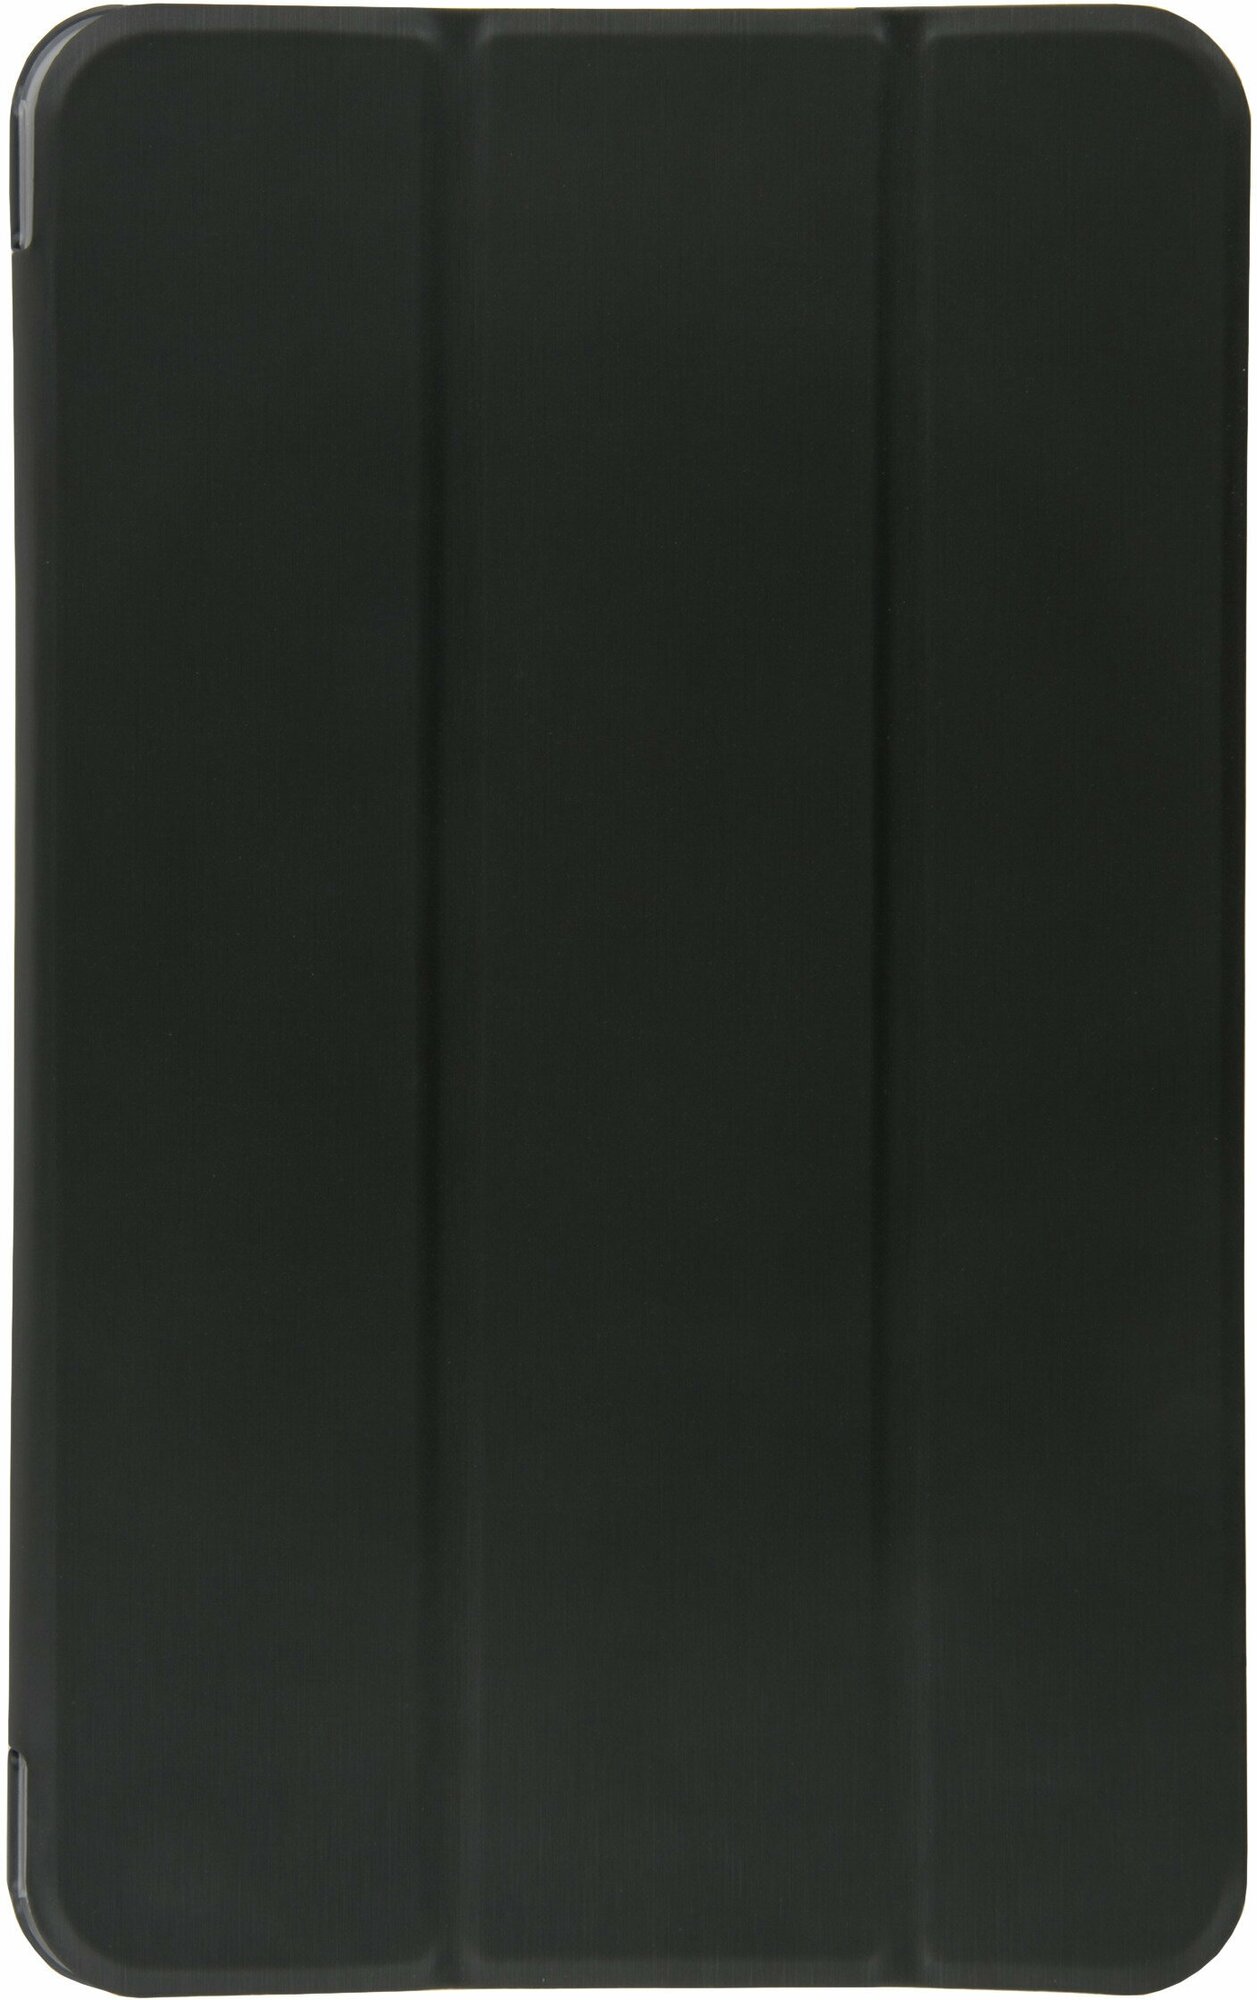 Защитный чехол-книжка для планшета Samsung Galaxy Tab A/Самсунг Гэлэкси Таб А 10.1 (T580/T585) черный (прозрачная задняя крышка)